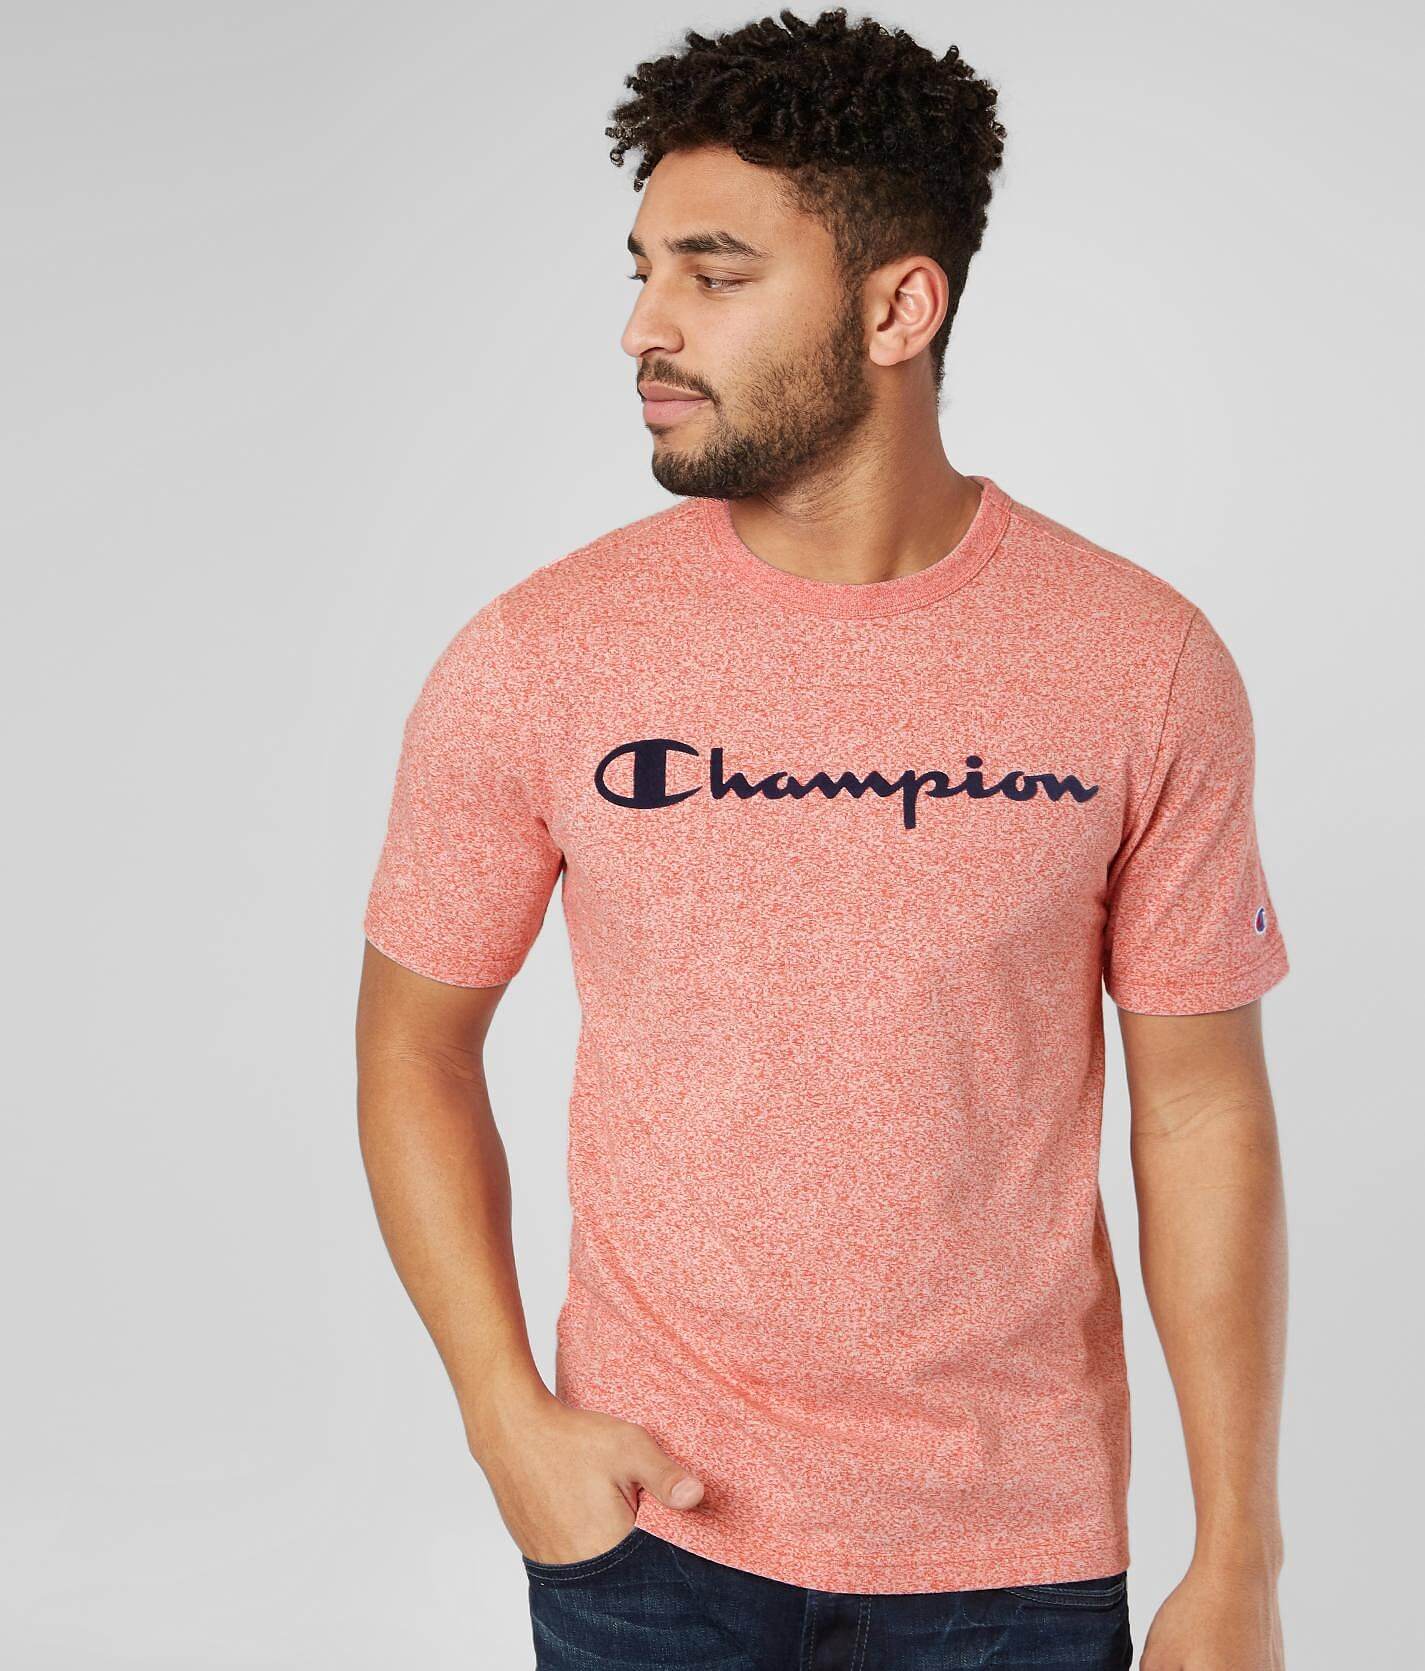 champion t shirt man